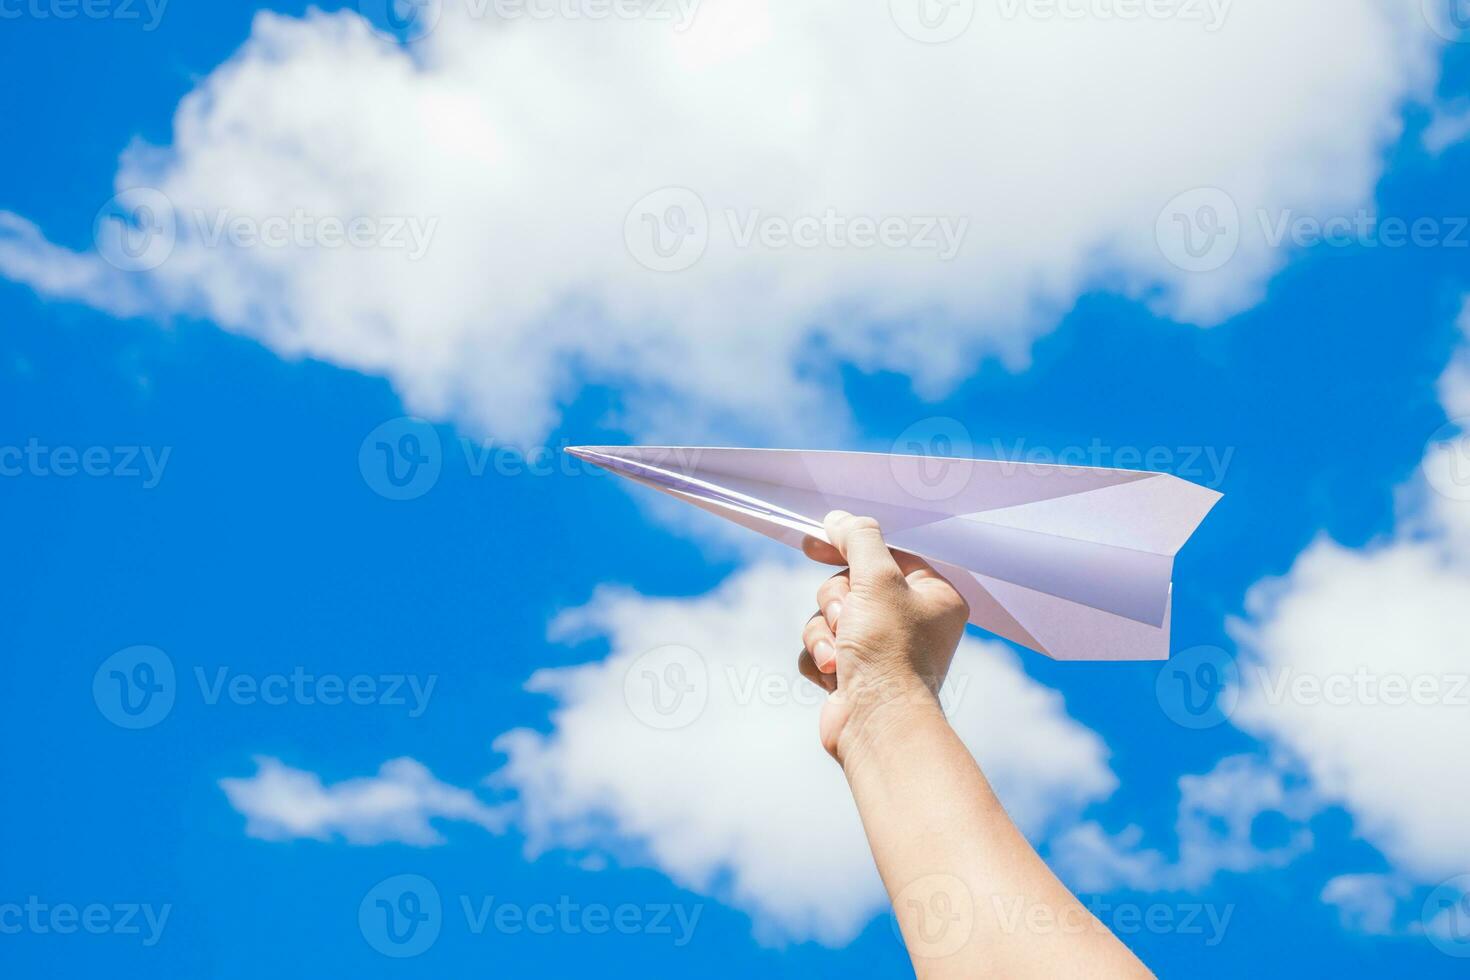 papier vliegtuig Aan hand- met lucht en clound achtergrond foto